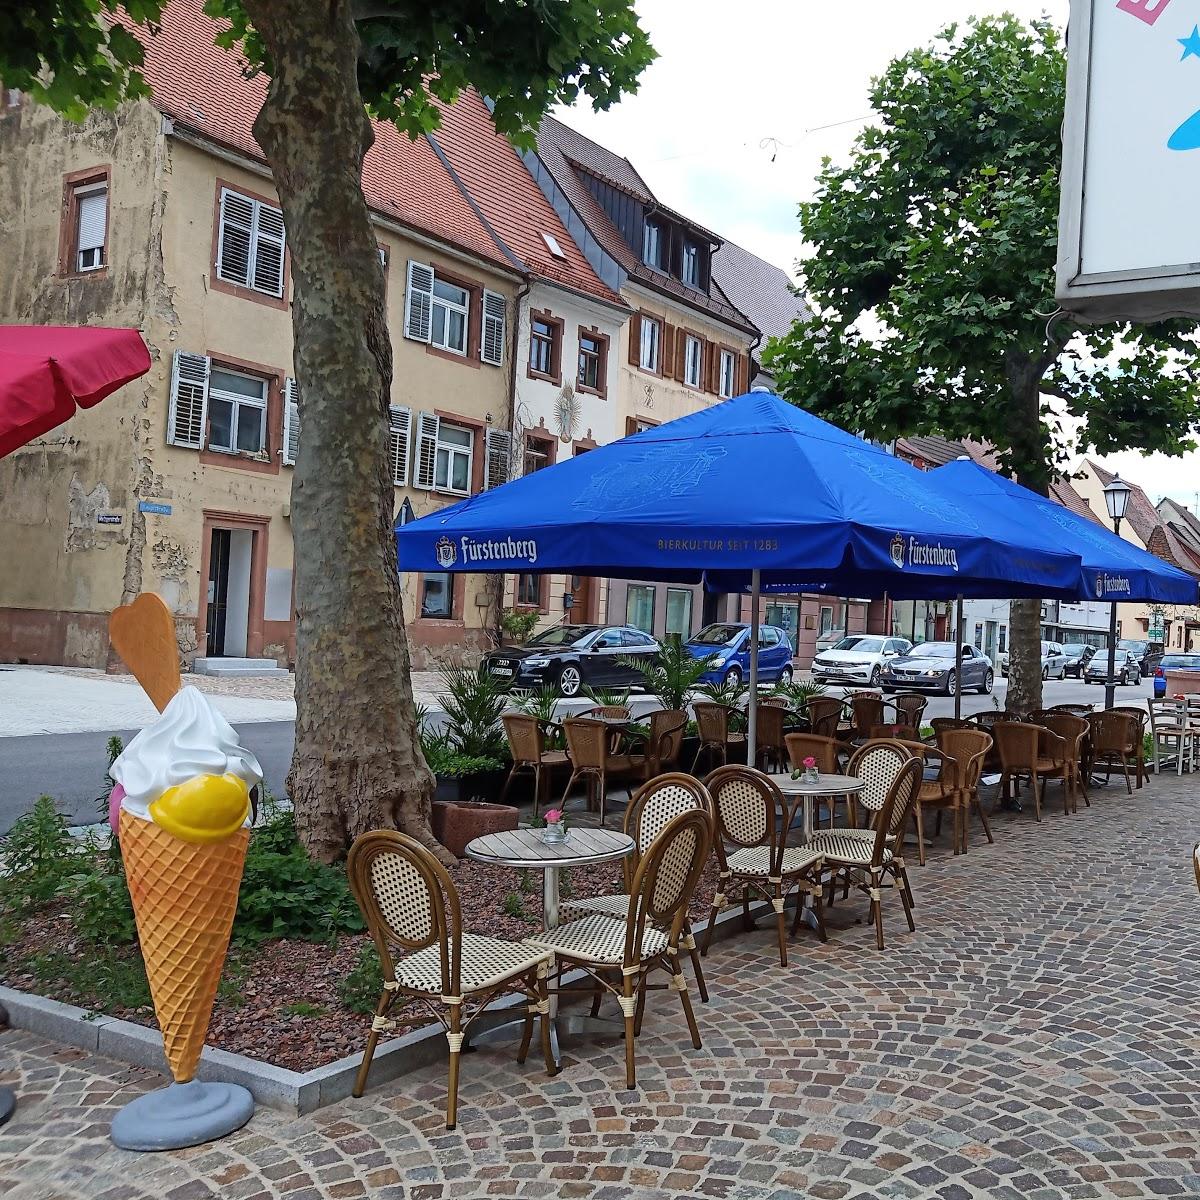 Restaurant "Eis-Galaxie" in Kenzingen